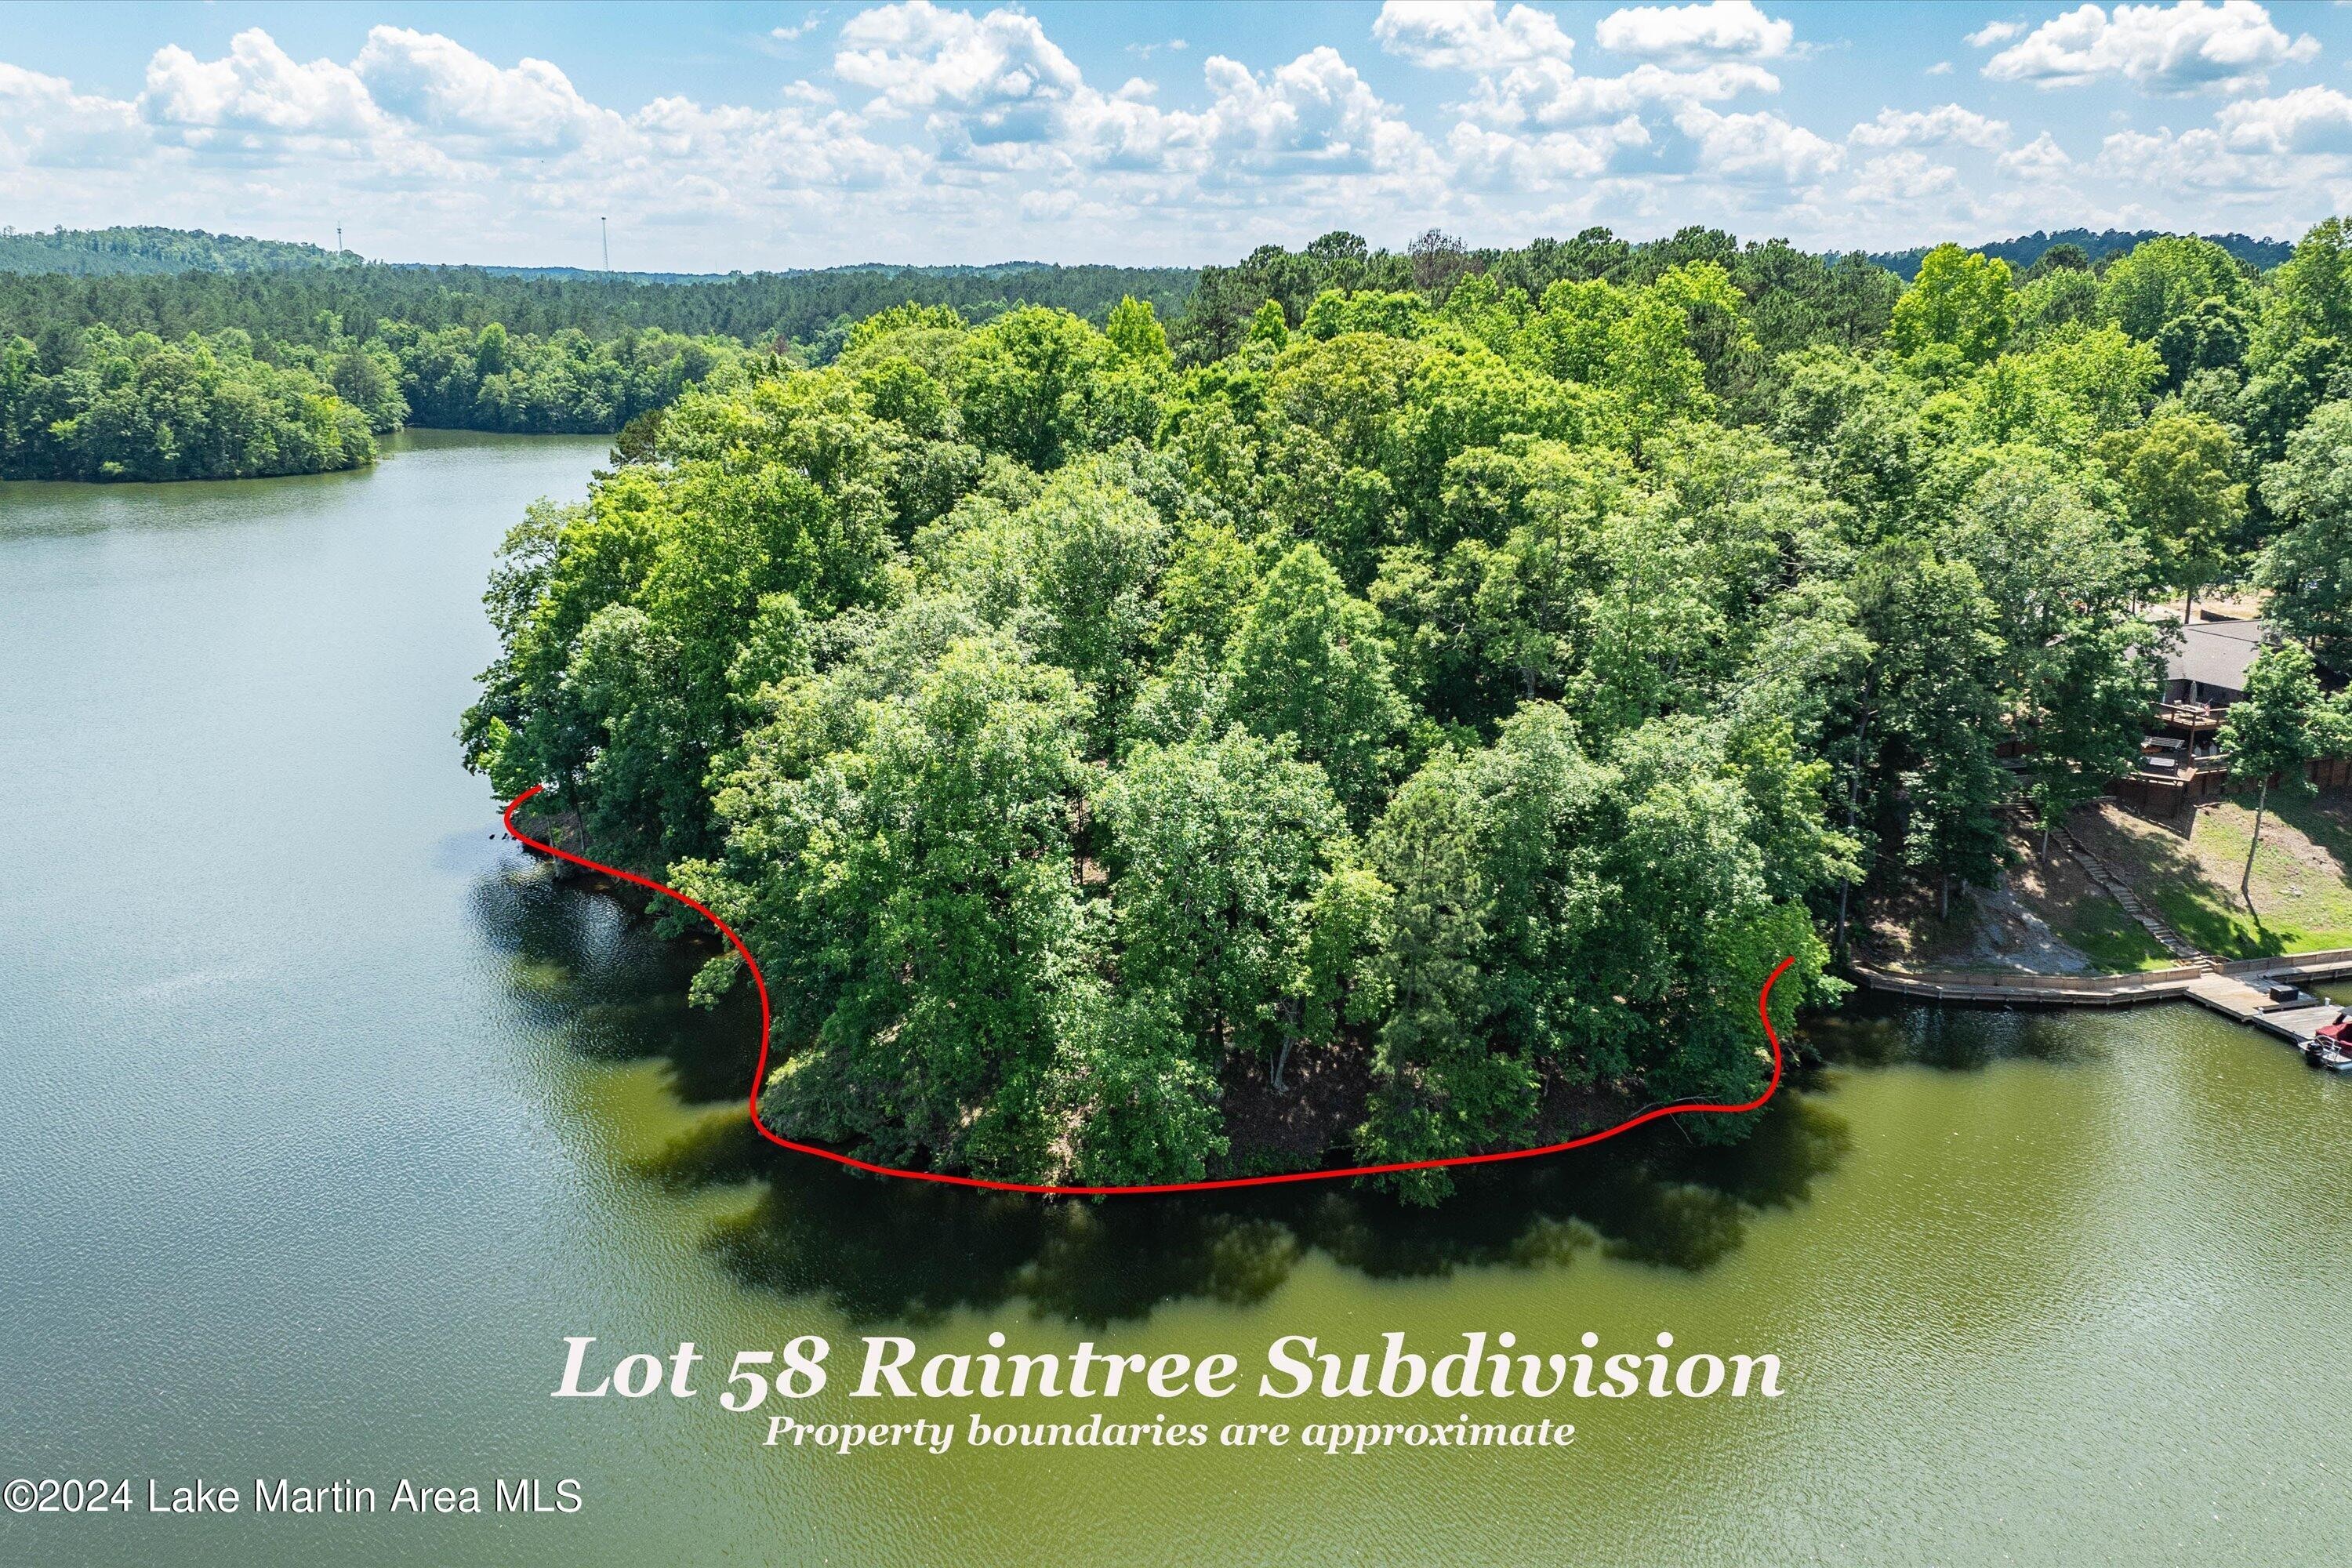 1. Lot 58 Raintree S/D